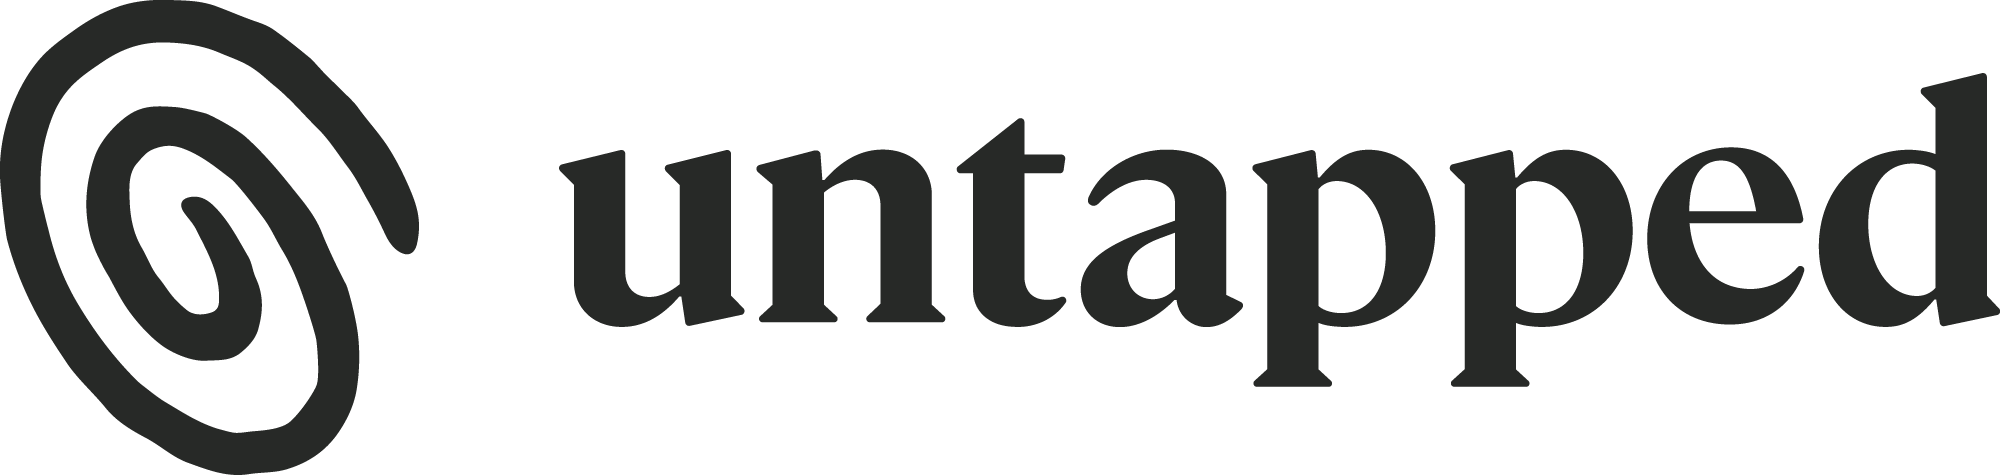 Untapped logo ink